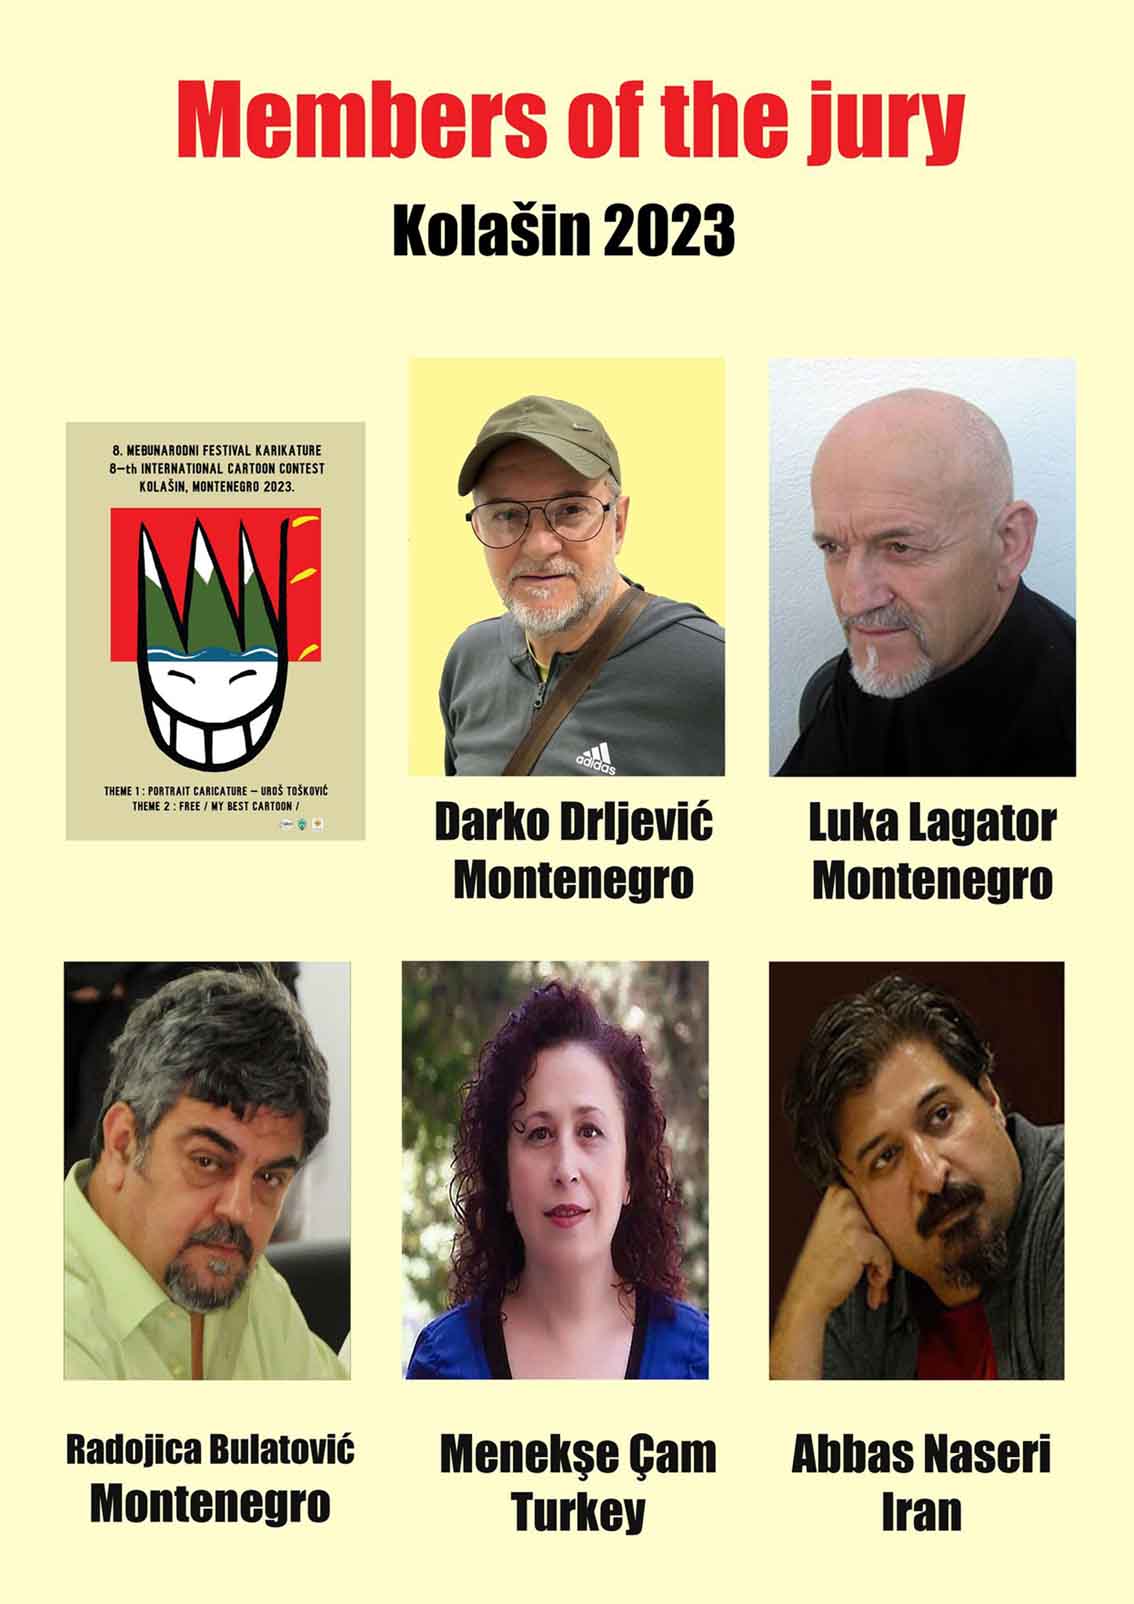 Jury of the 8th International Cartoon Contest, Kolasin 2023